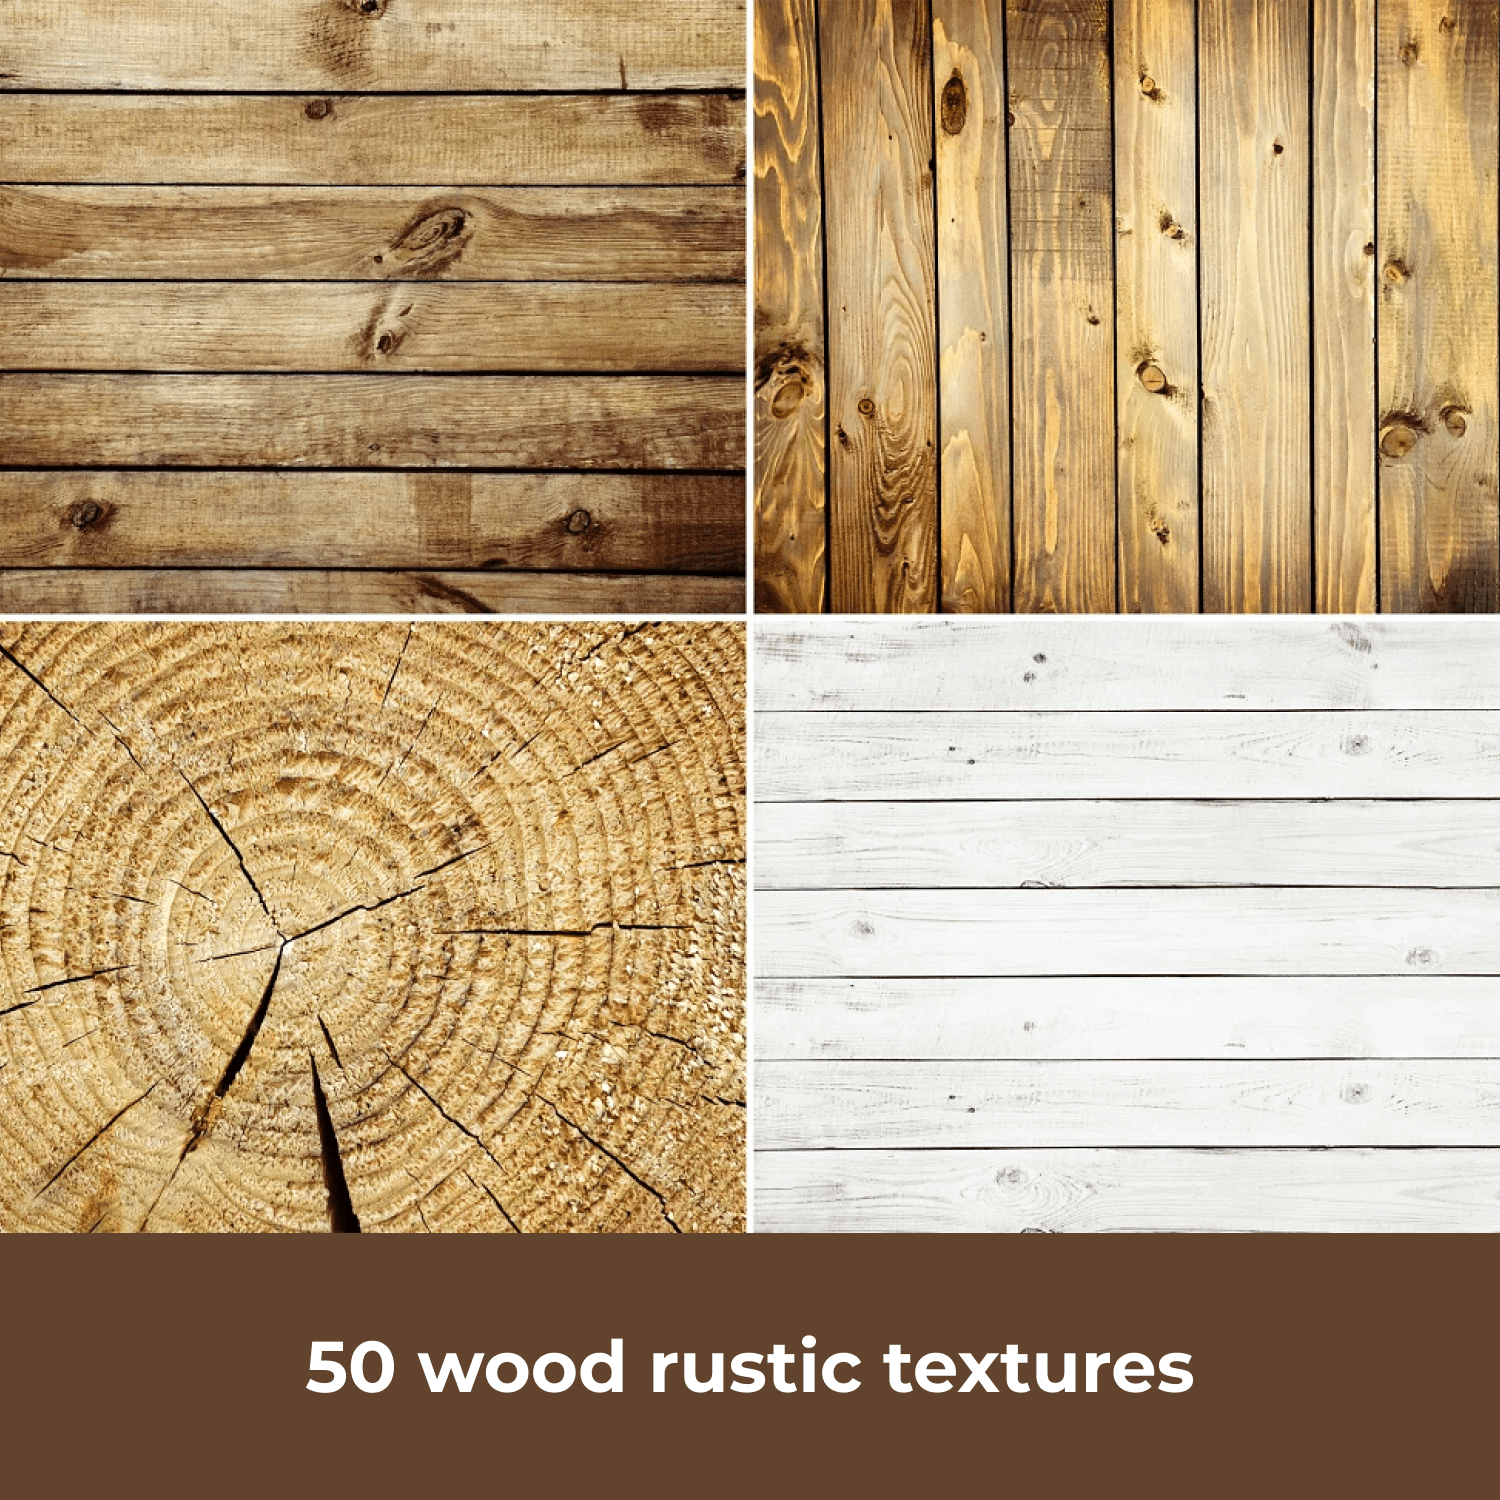 50 wood rustic textures.